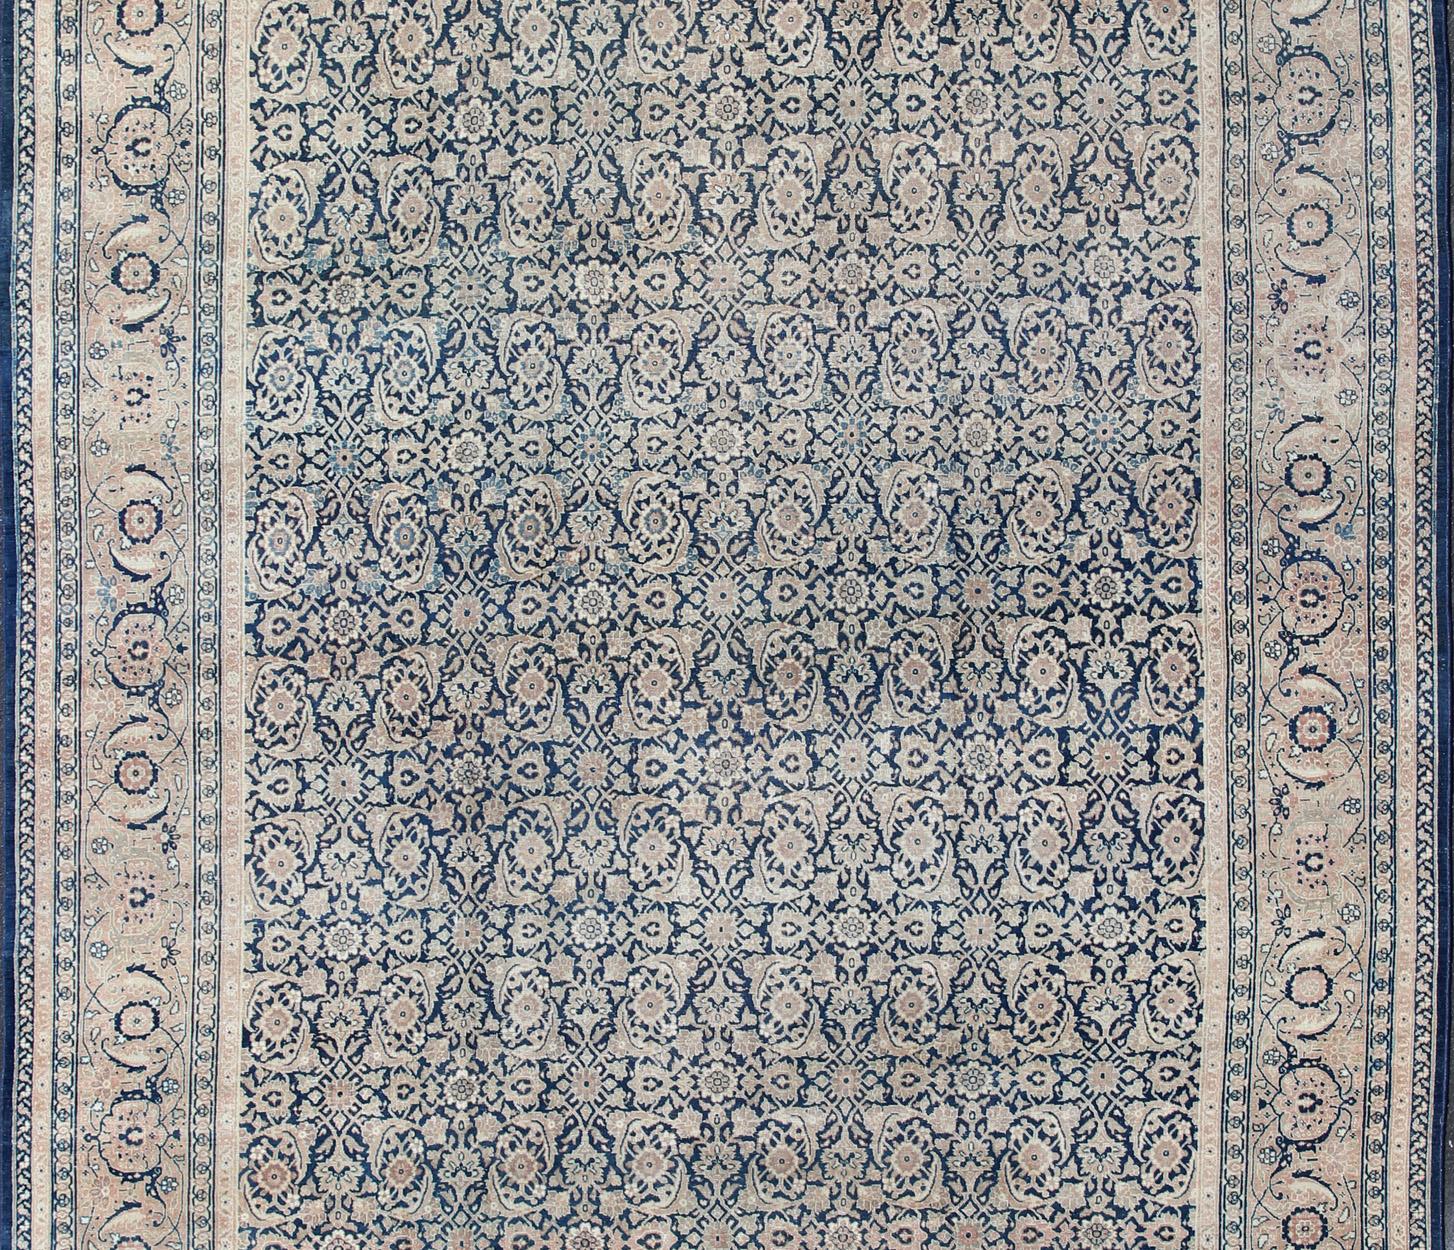 Antique Persian Tabriz Carpet with Geometric Herati Design in Dark Blue Tones In Good Condition For Sale In Atlanta, GA